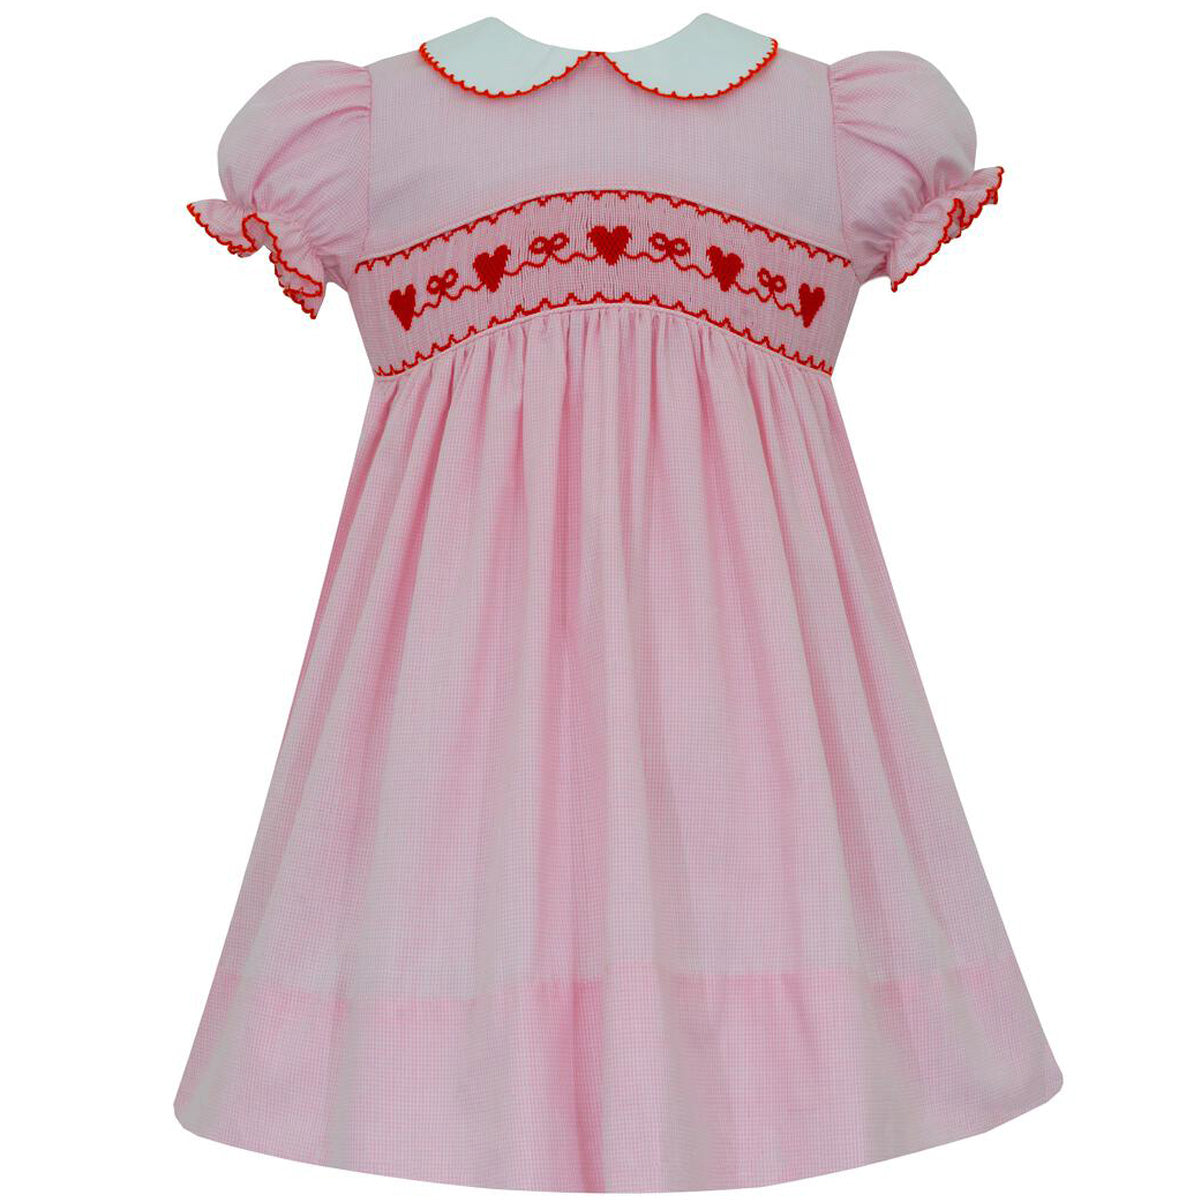 Smocked String of Hearts Pink Gingham Dress